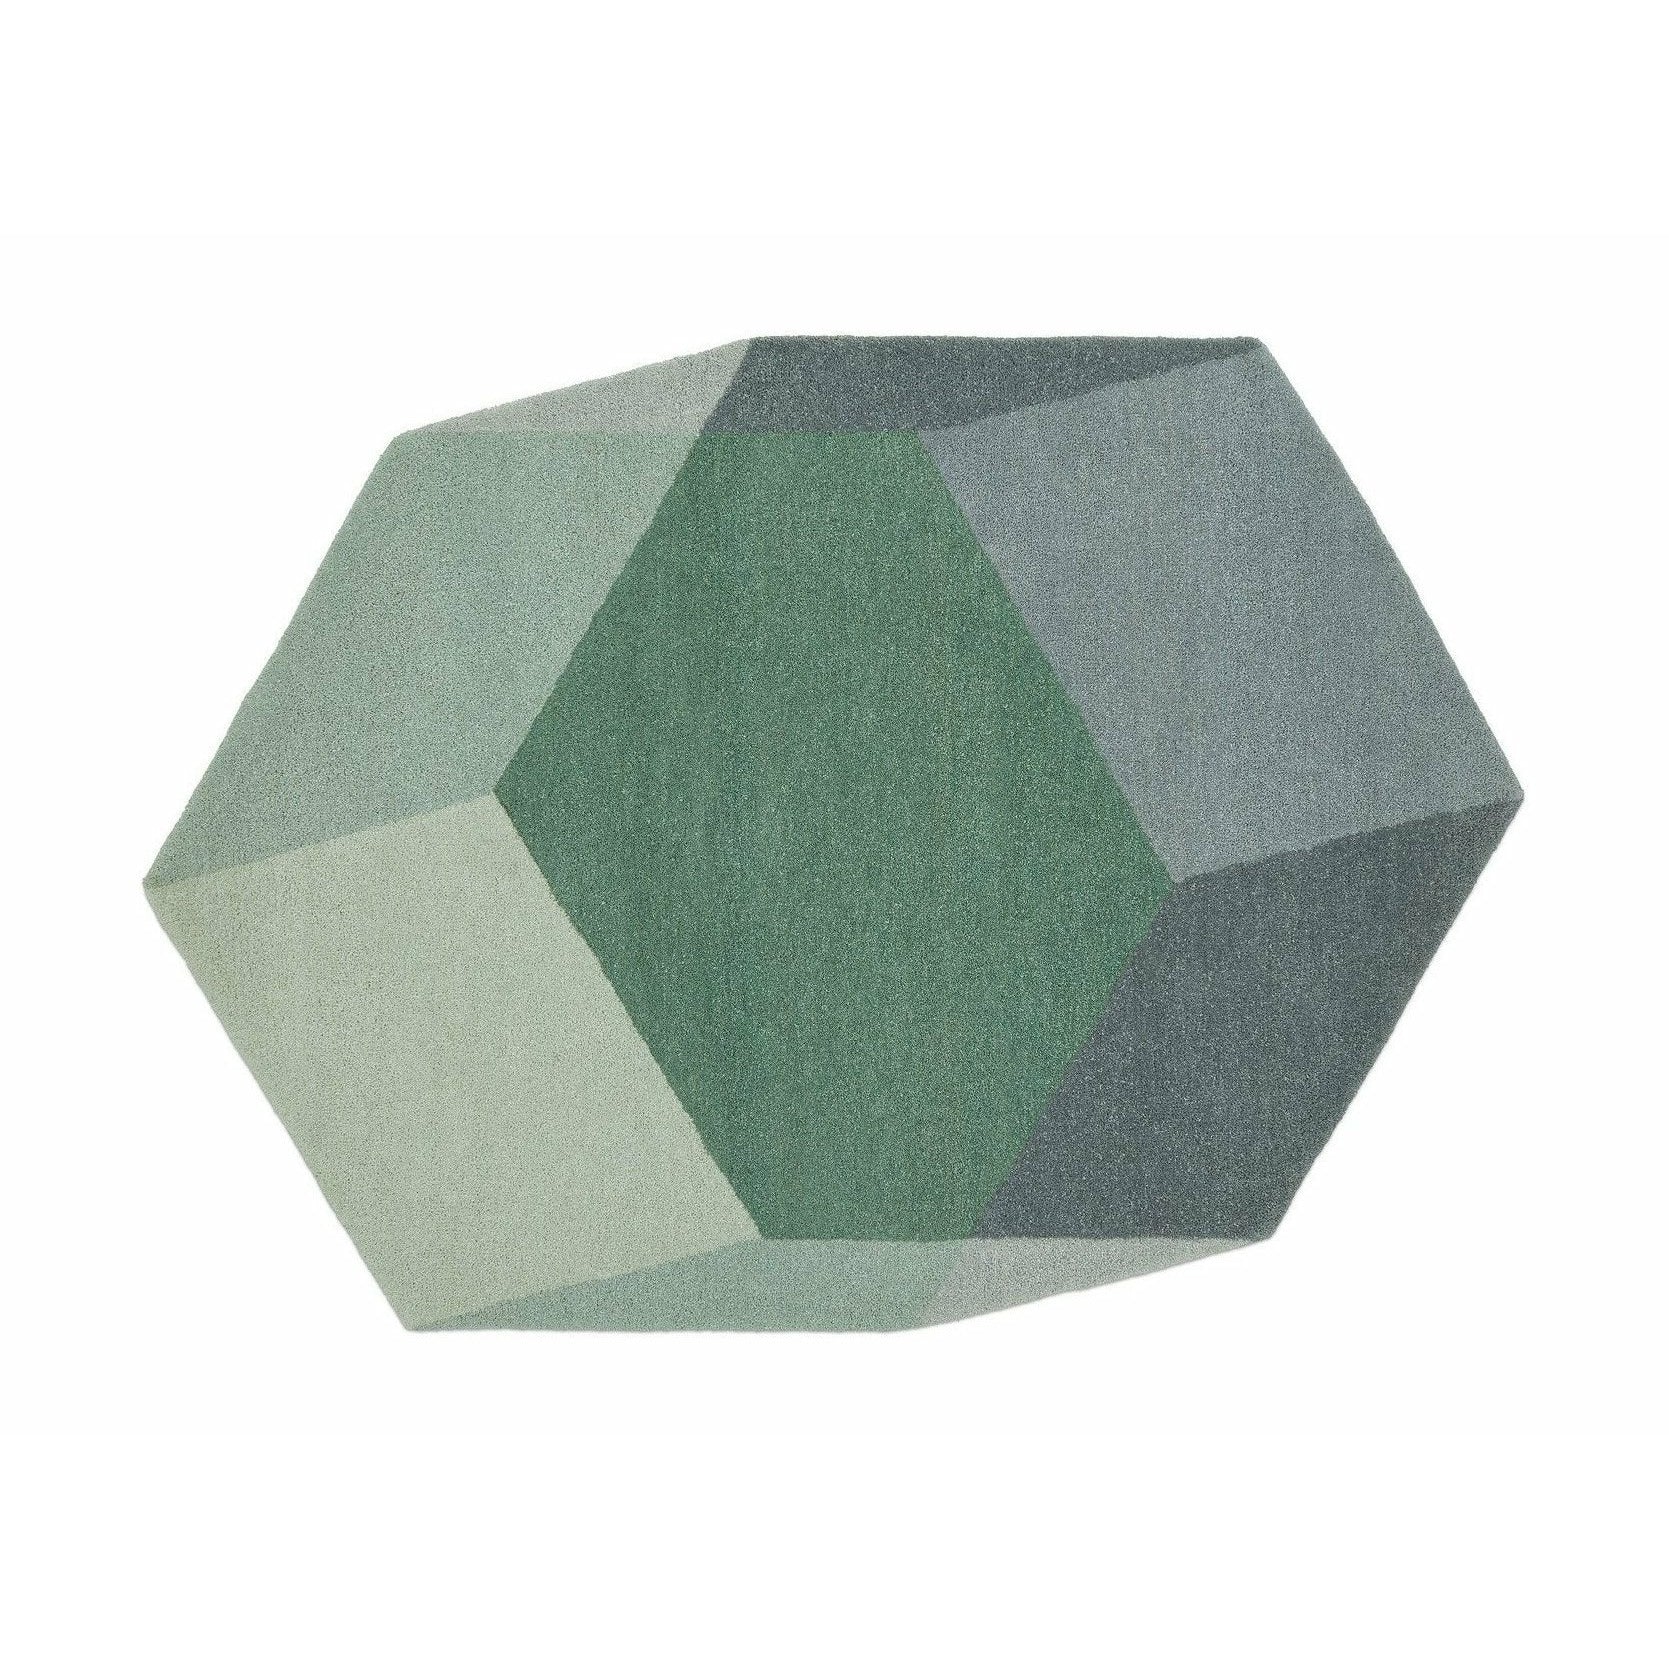 Puik Iso Teppich Hexagon, grün